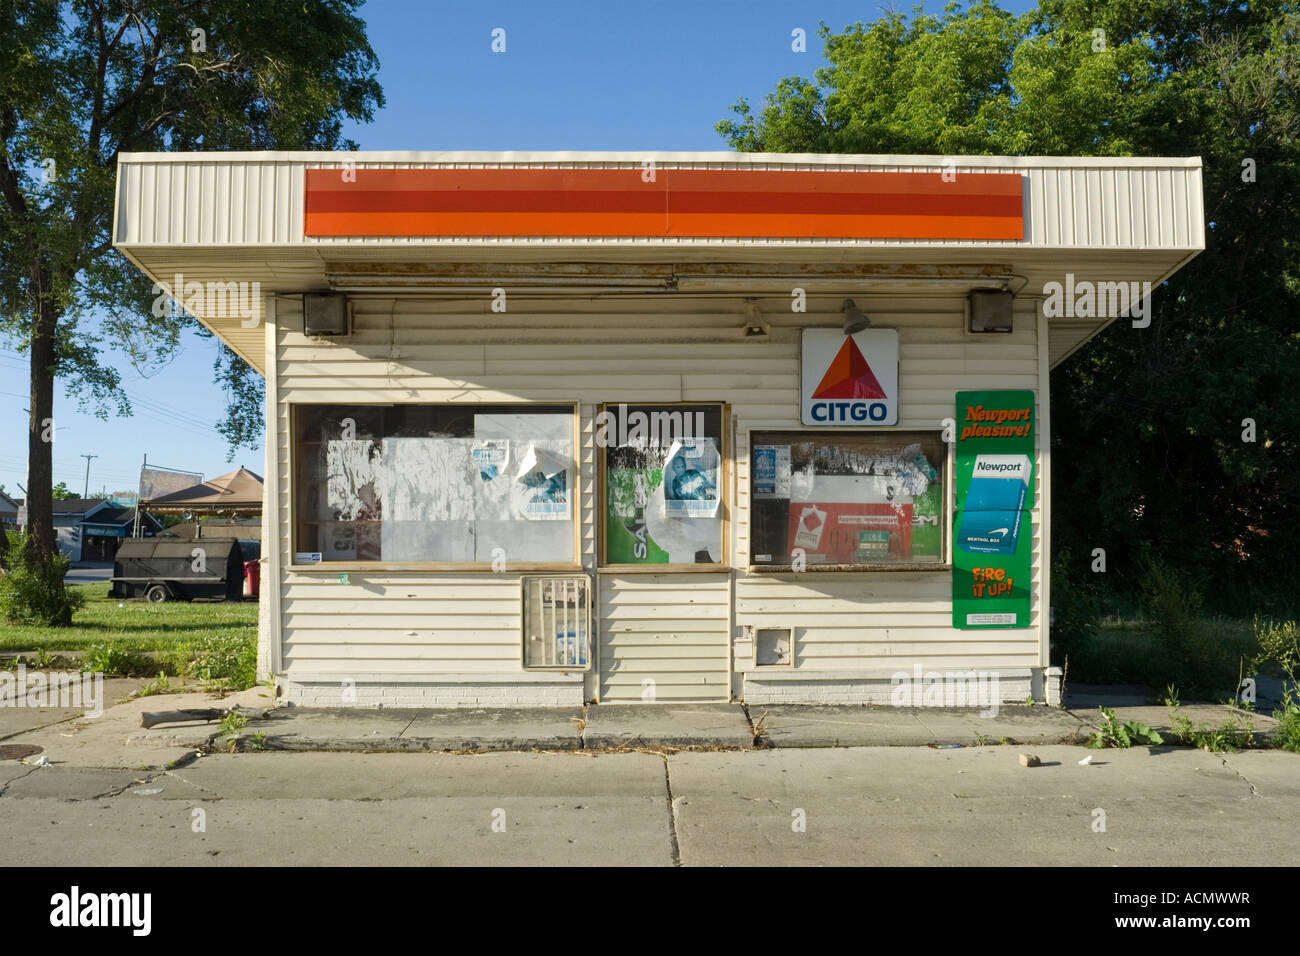 Abandoned gas station in Flint Michigan USA Stock Photo